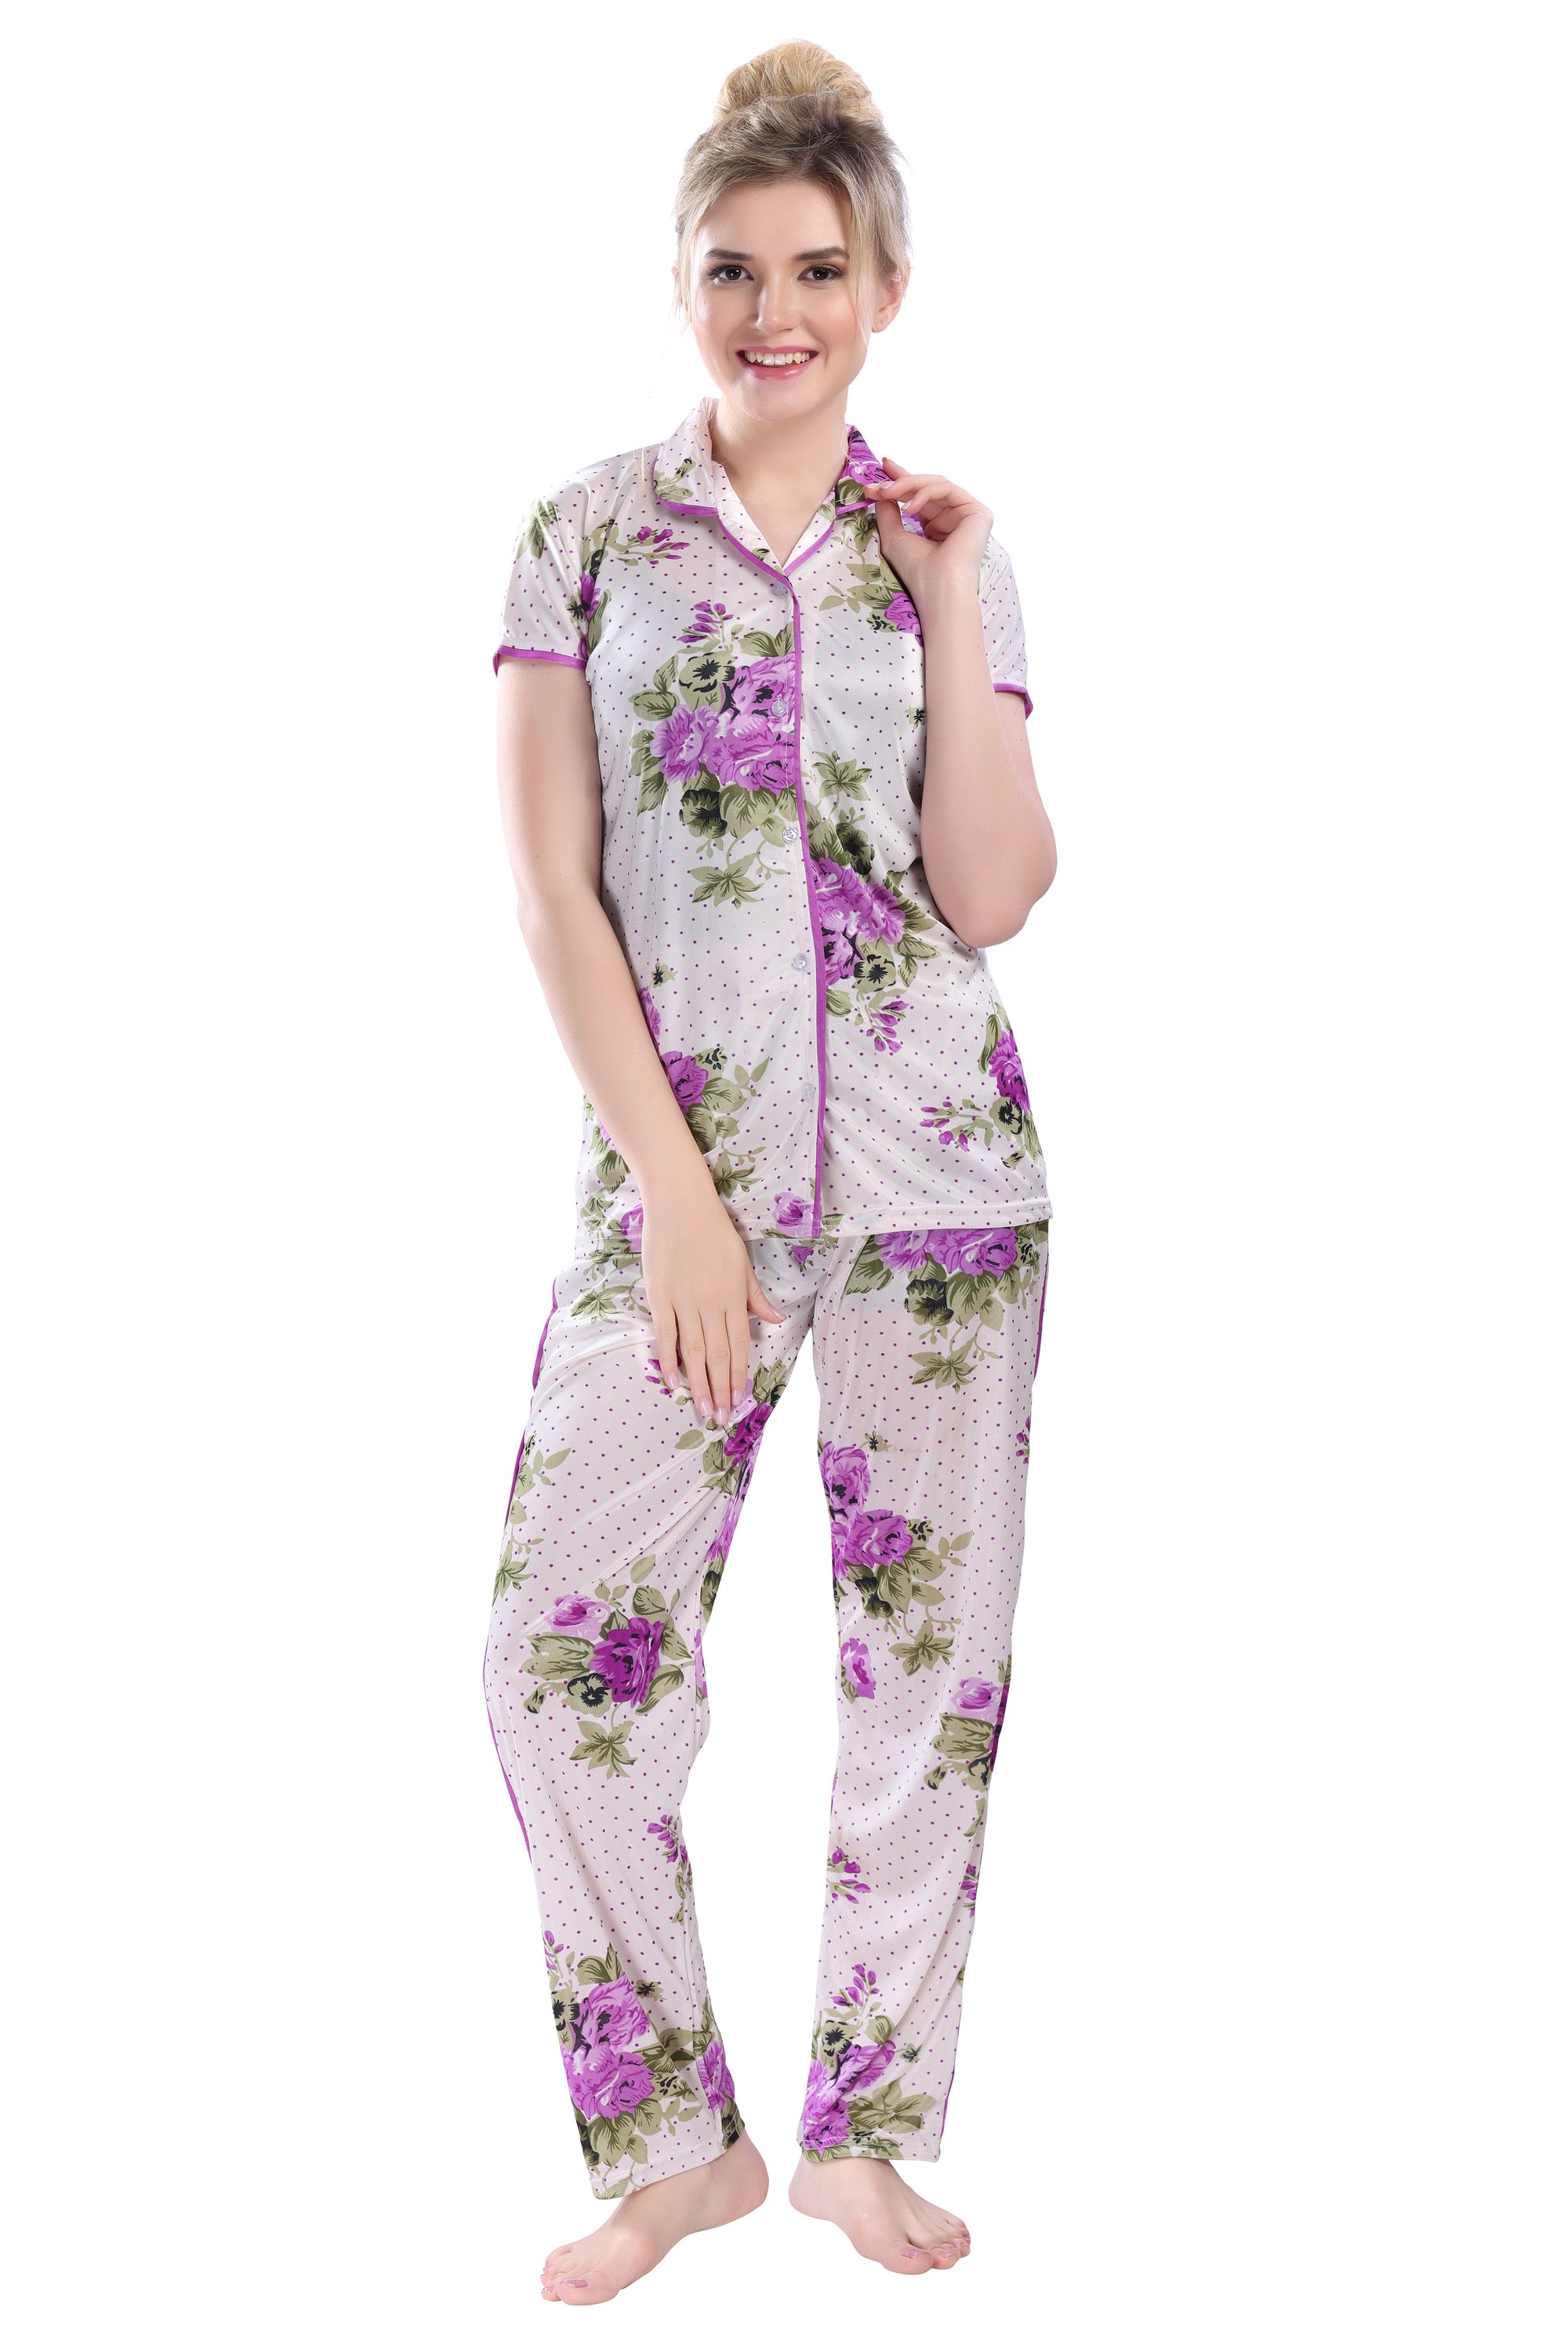 Style Dunes Printed Night Suit for Women - Floral Print Satin Shirt and Pyjama Set (Front Open Collar Night Suit) - Wowxop